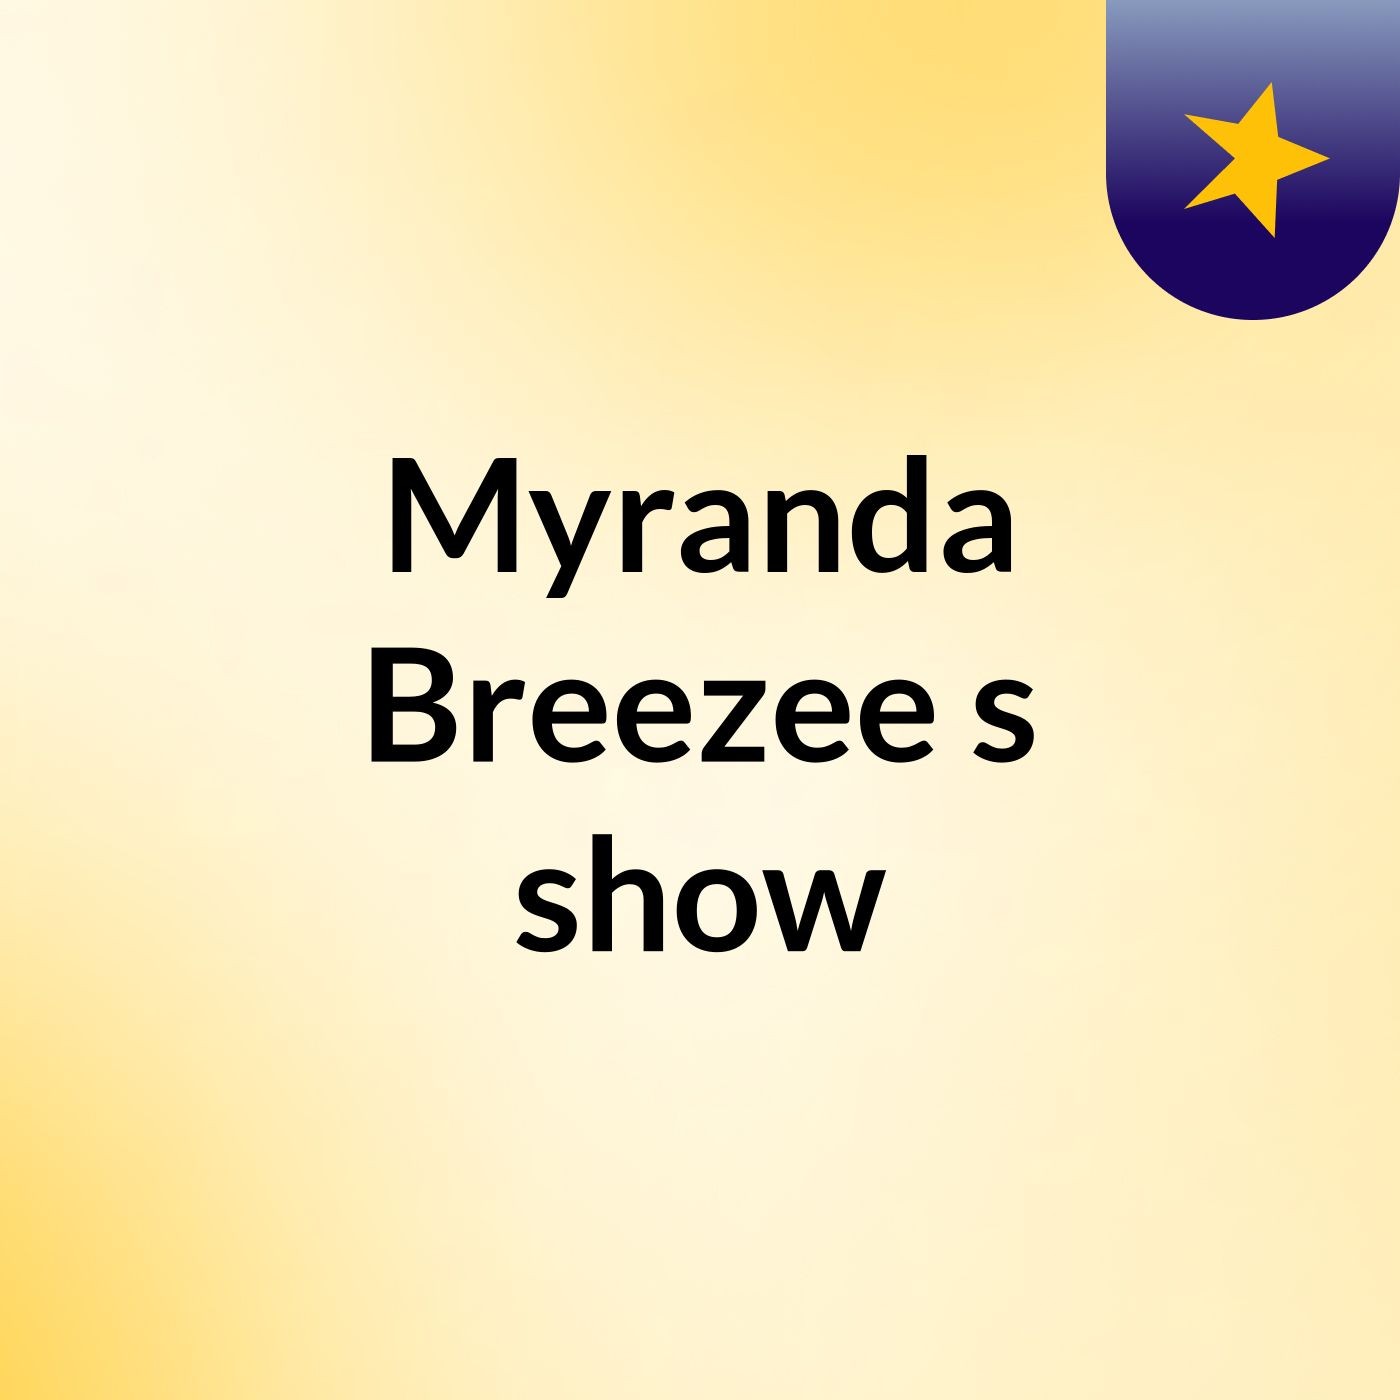 Myranda Breezee's show